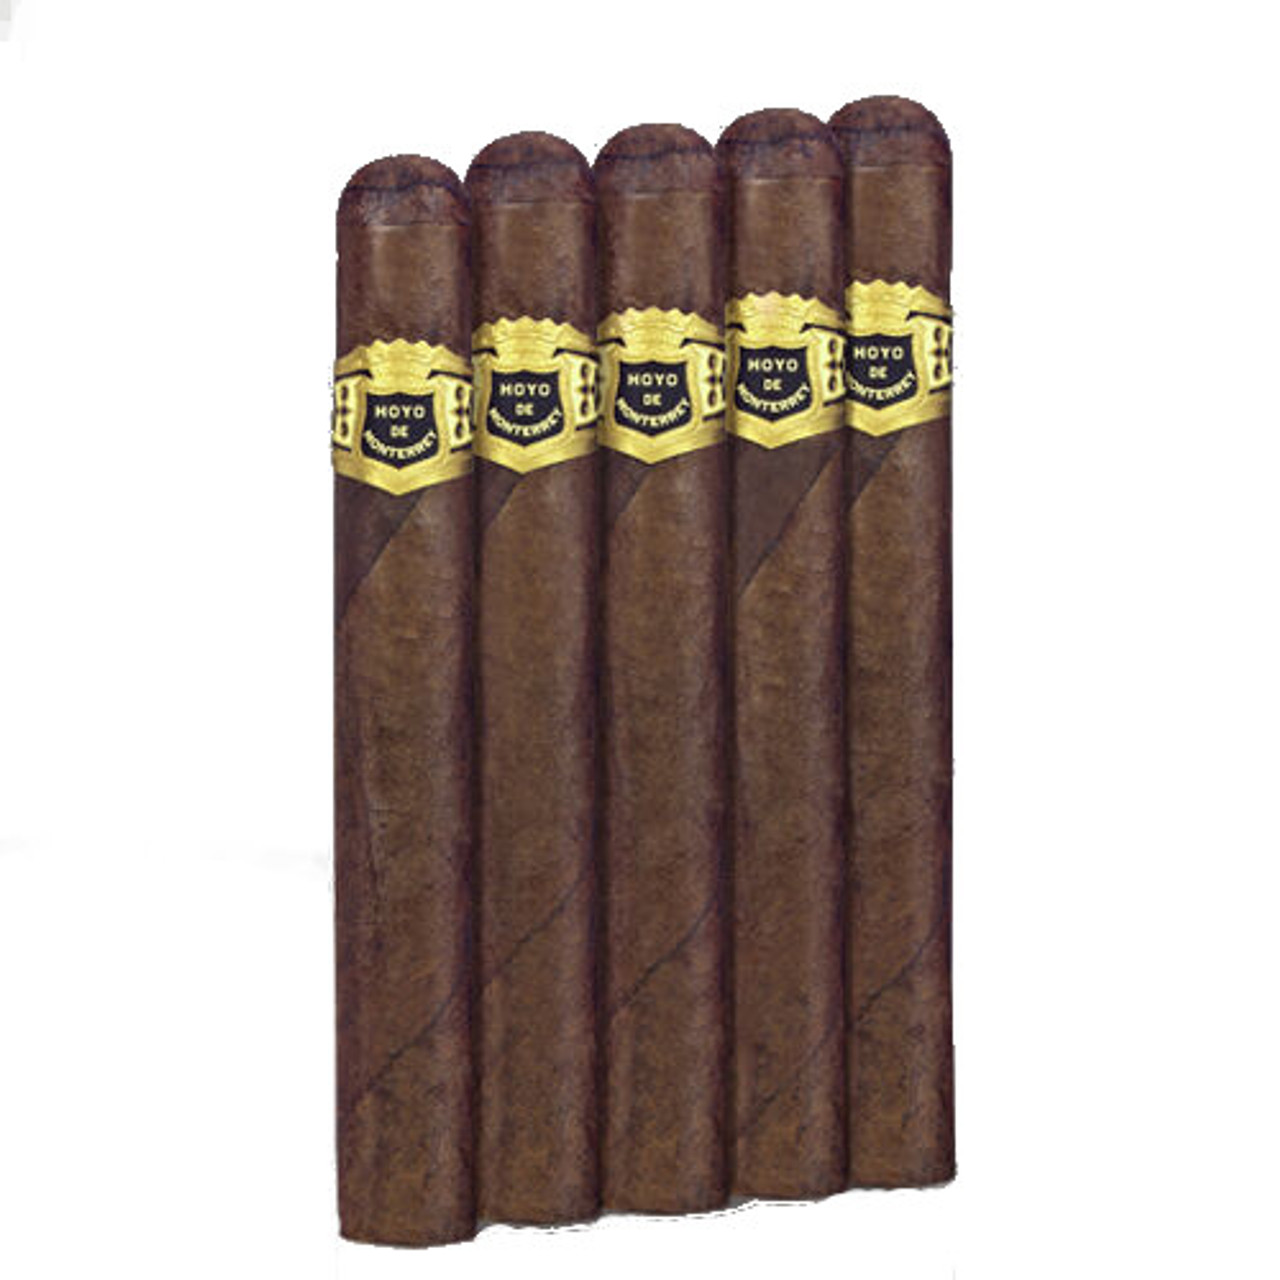 Hoyo de Monterrey Double Corona Cigars - 6.75 x 48 (Pack of 5) *Box